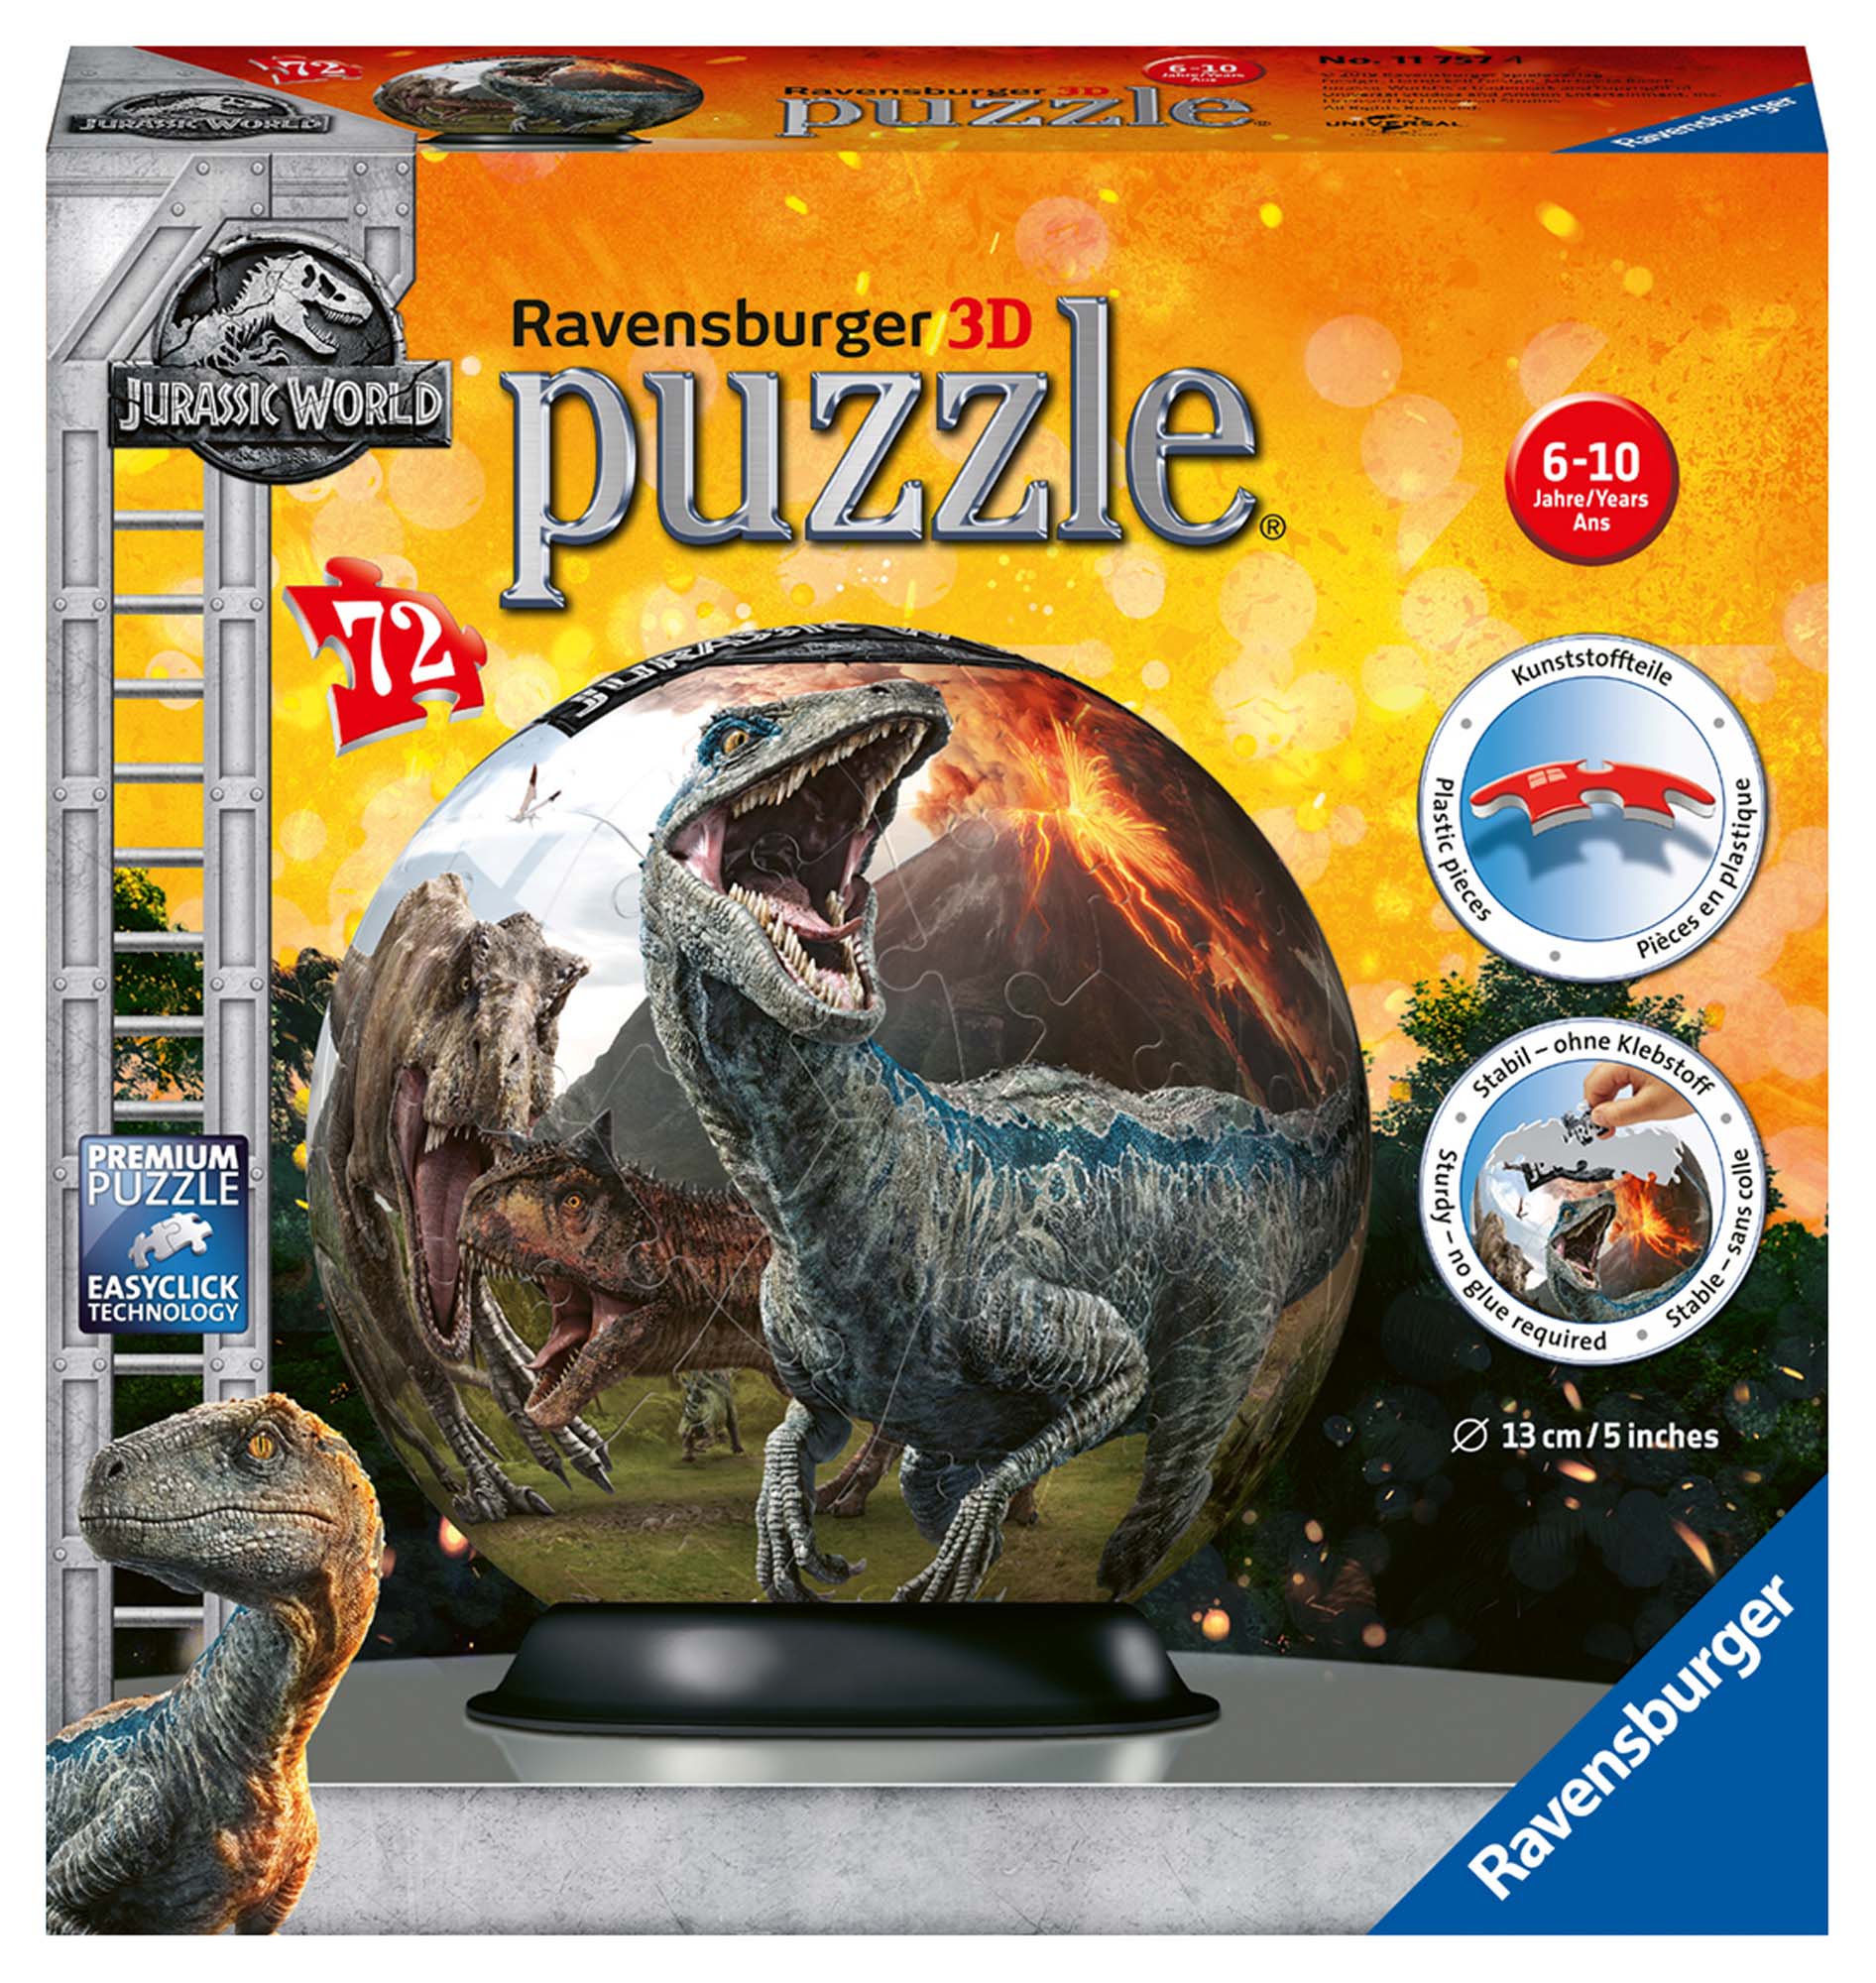 Jurassic world - 3d puzzleball ravensburger - Jurassic World, RAVENSBURGER 3D PUZZLE